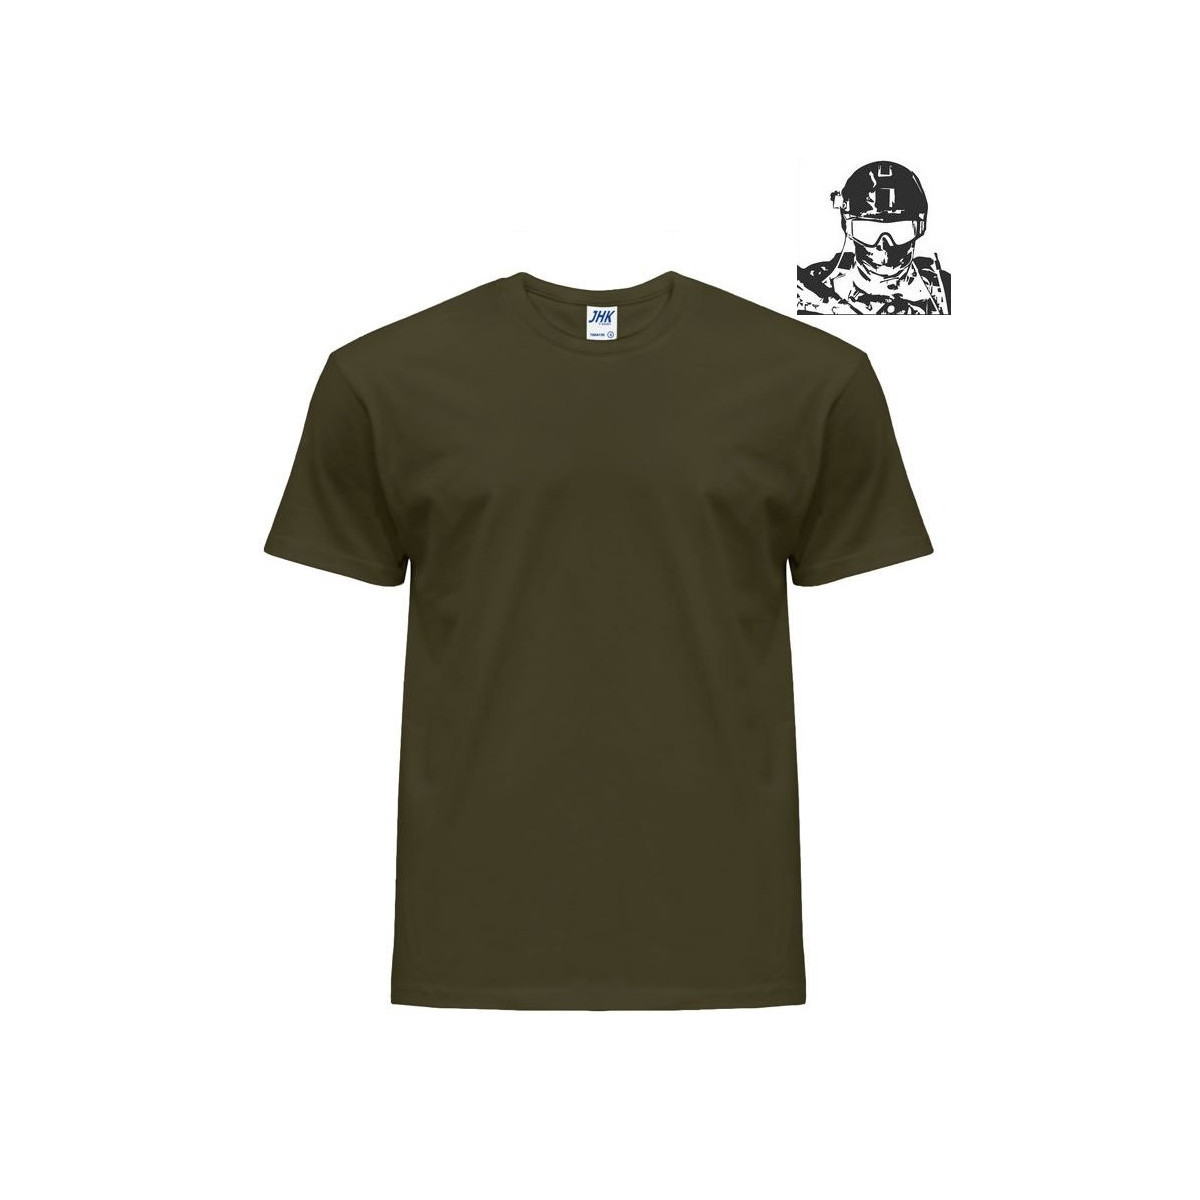 t-shirt-koszulka - Koszulka t-shirt tsra150 khaki militarna JHK Polska